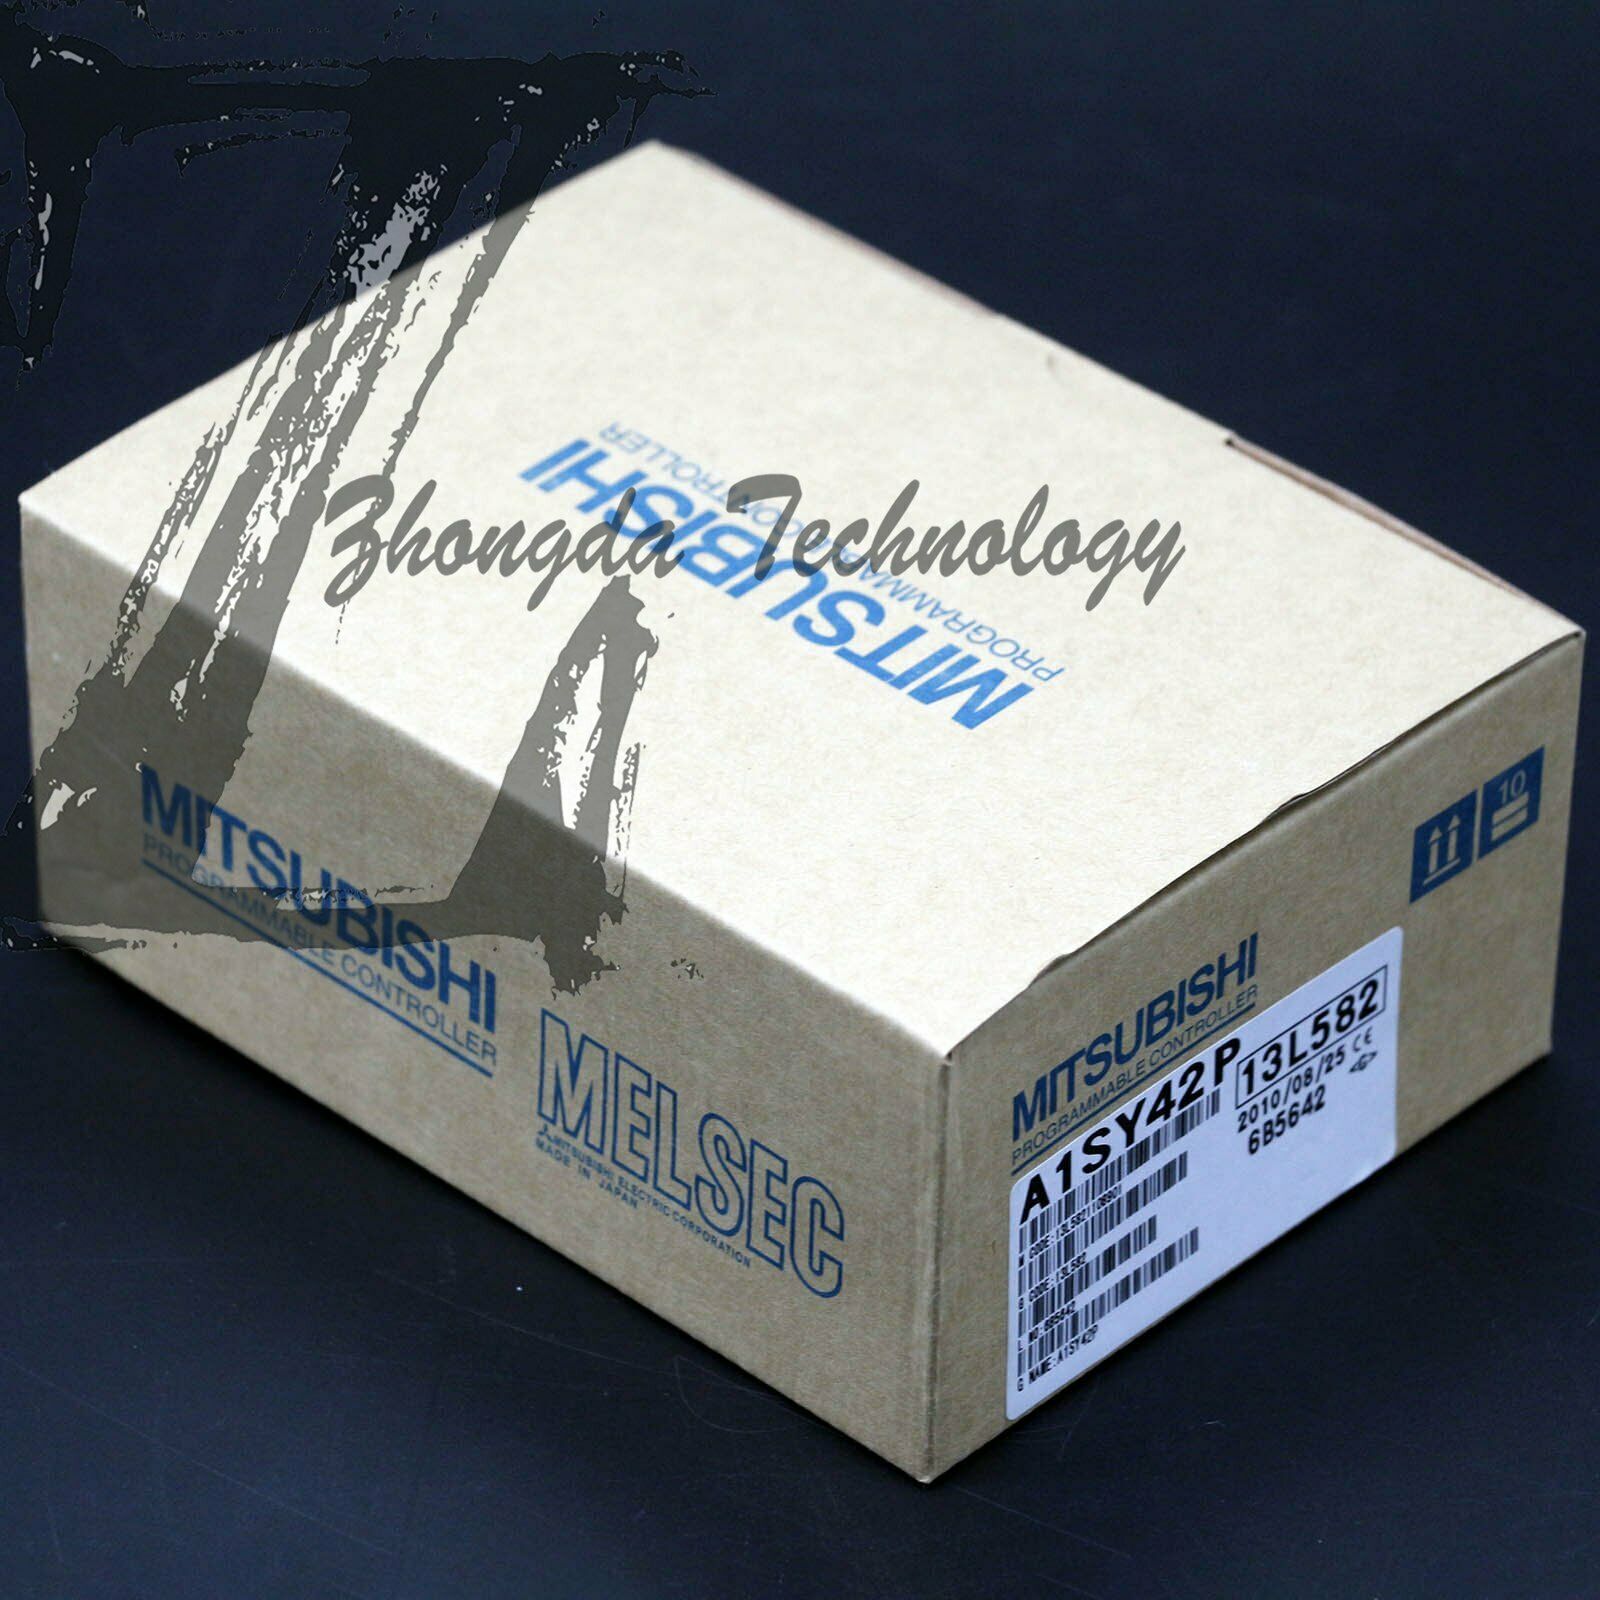 1PCS New IN BOX MITSUBISHI PLC A1SY42P Output Module One year warranty KOEED $0-100, 80%, import_2020_10_10_031751, MITSUBISHI, PLC